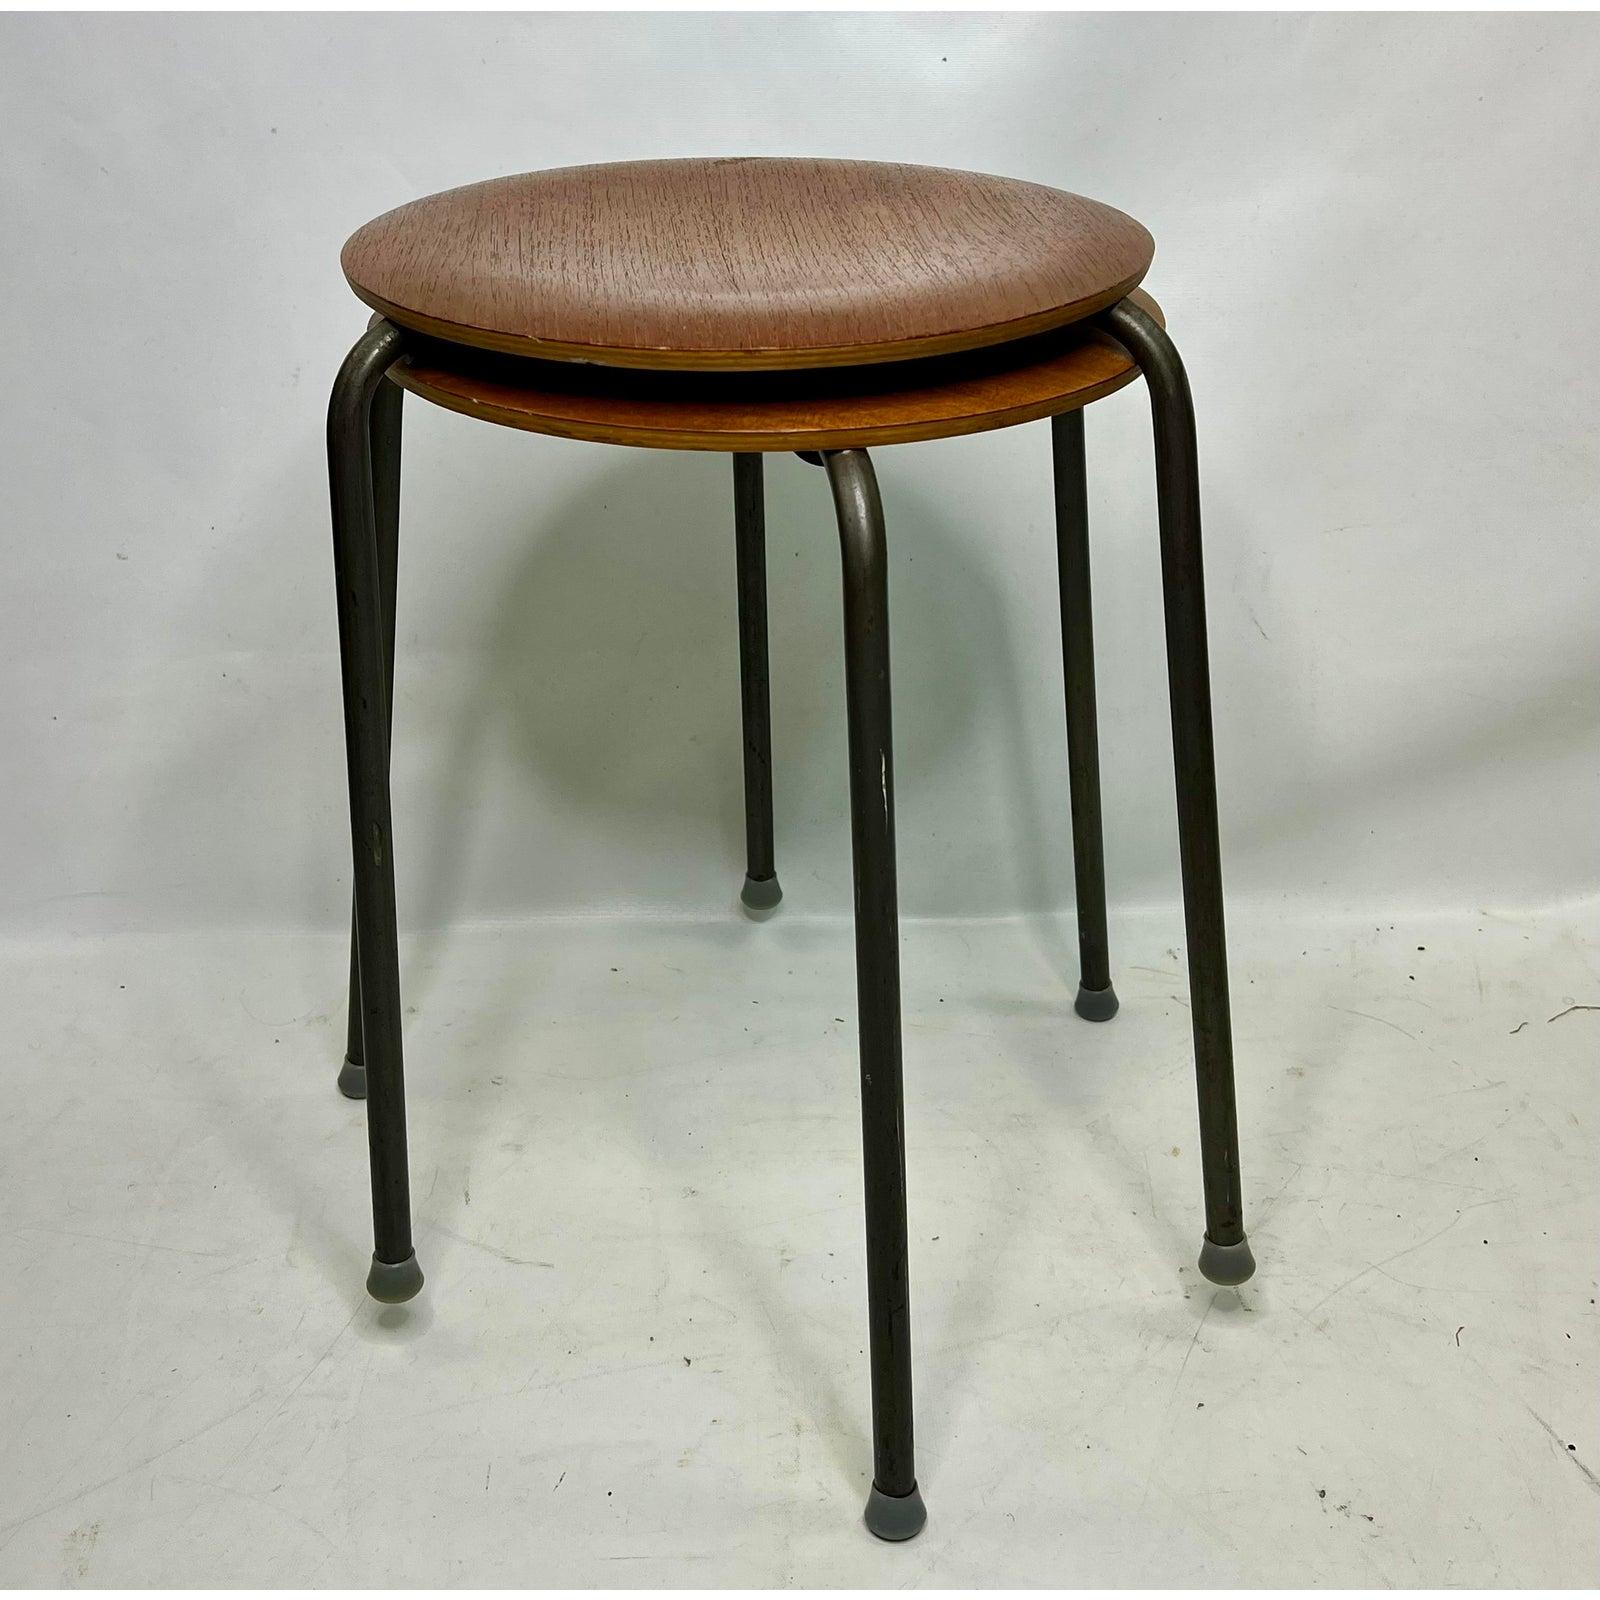 Arne Jacobsen style Danish teak stacking stools - a pair.